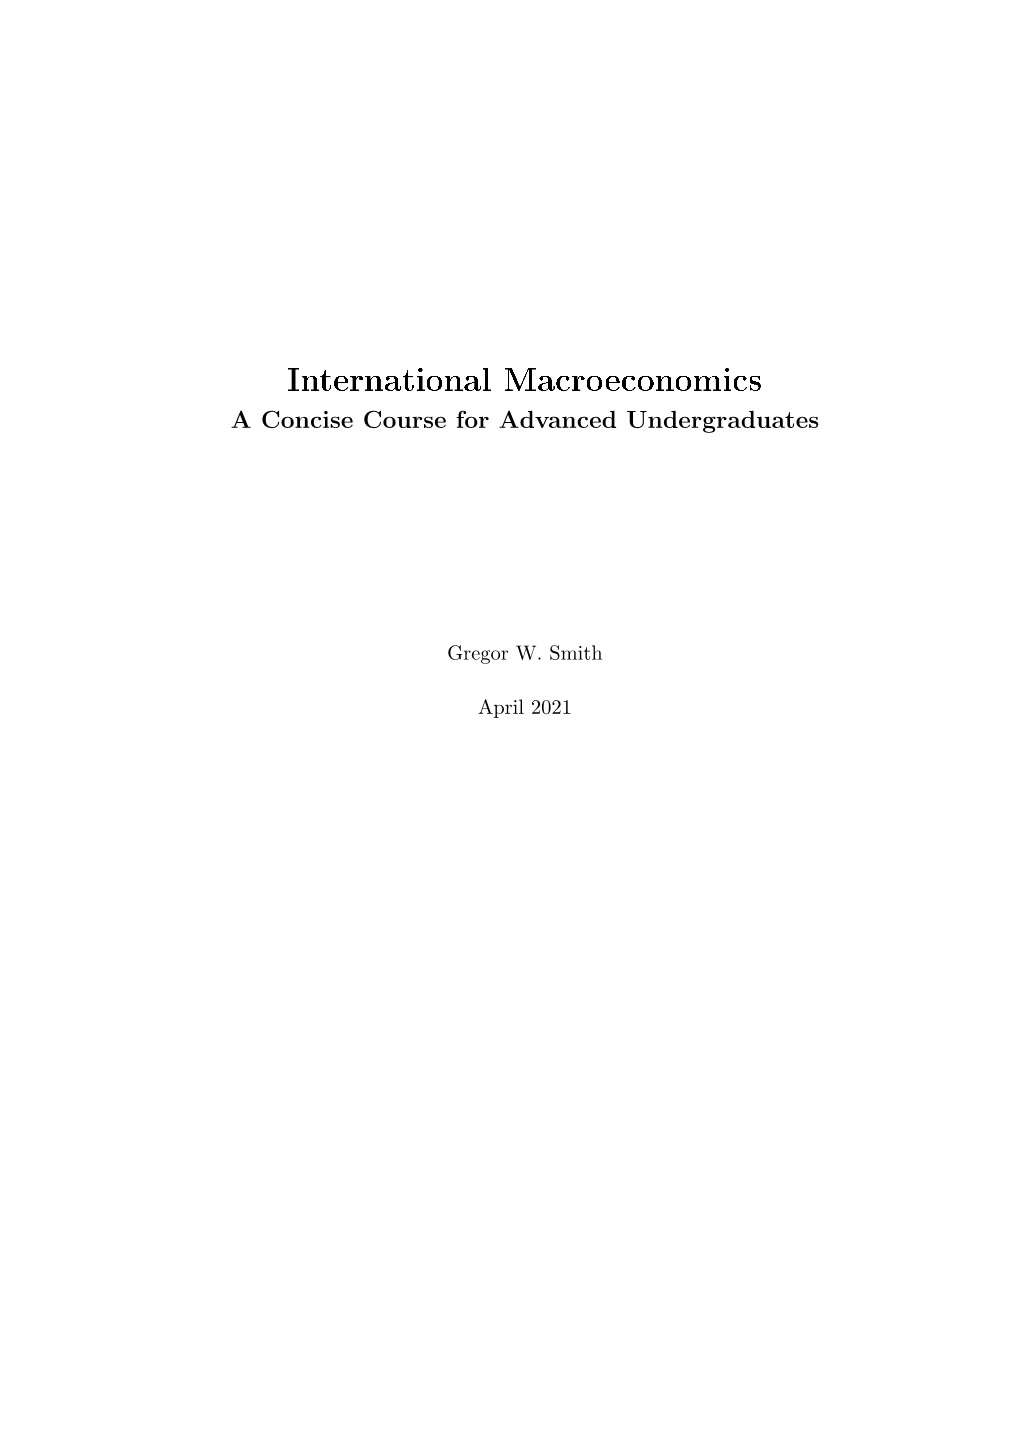 International Macroeconomics a Concise Course for Advanced Undergraduates